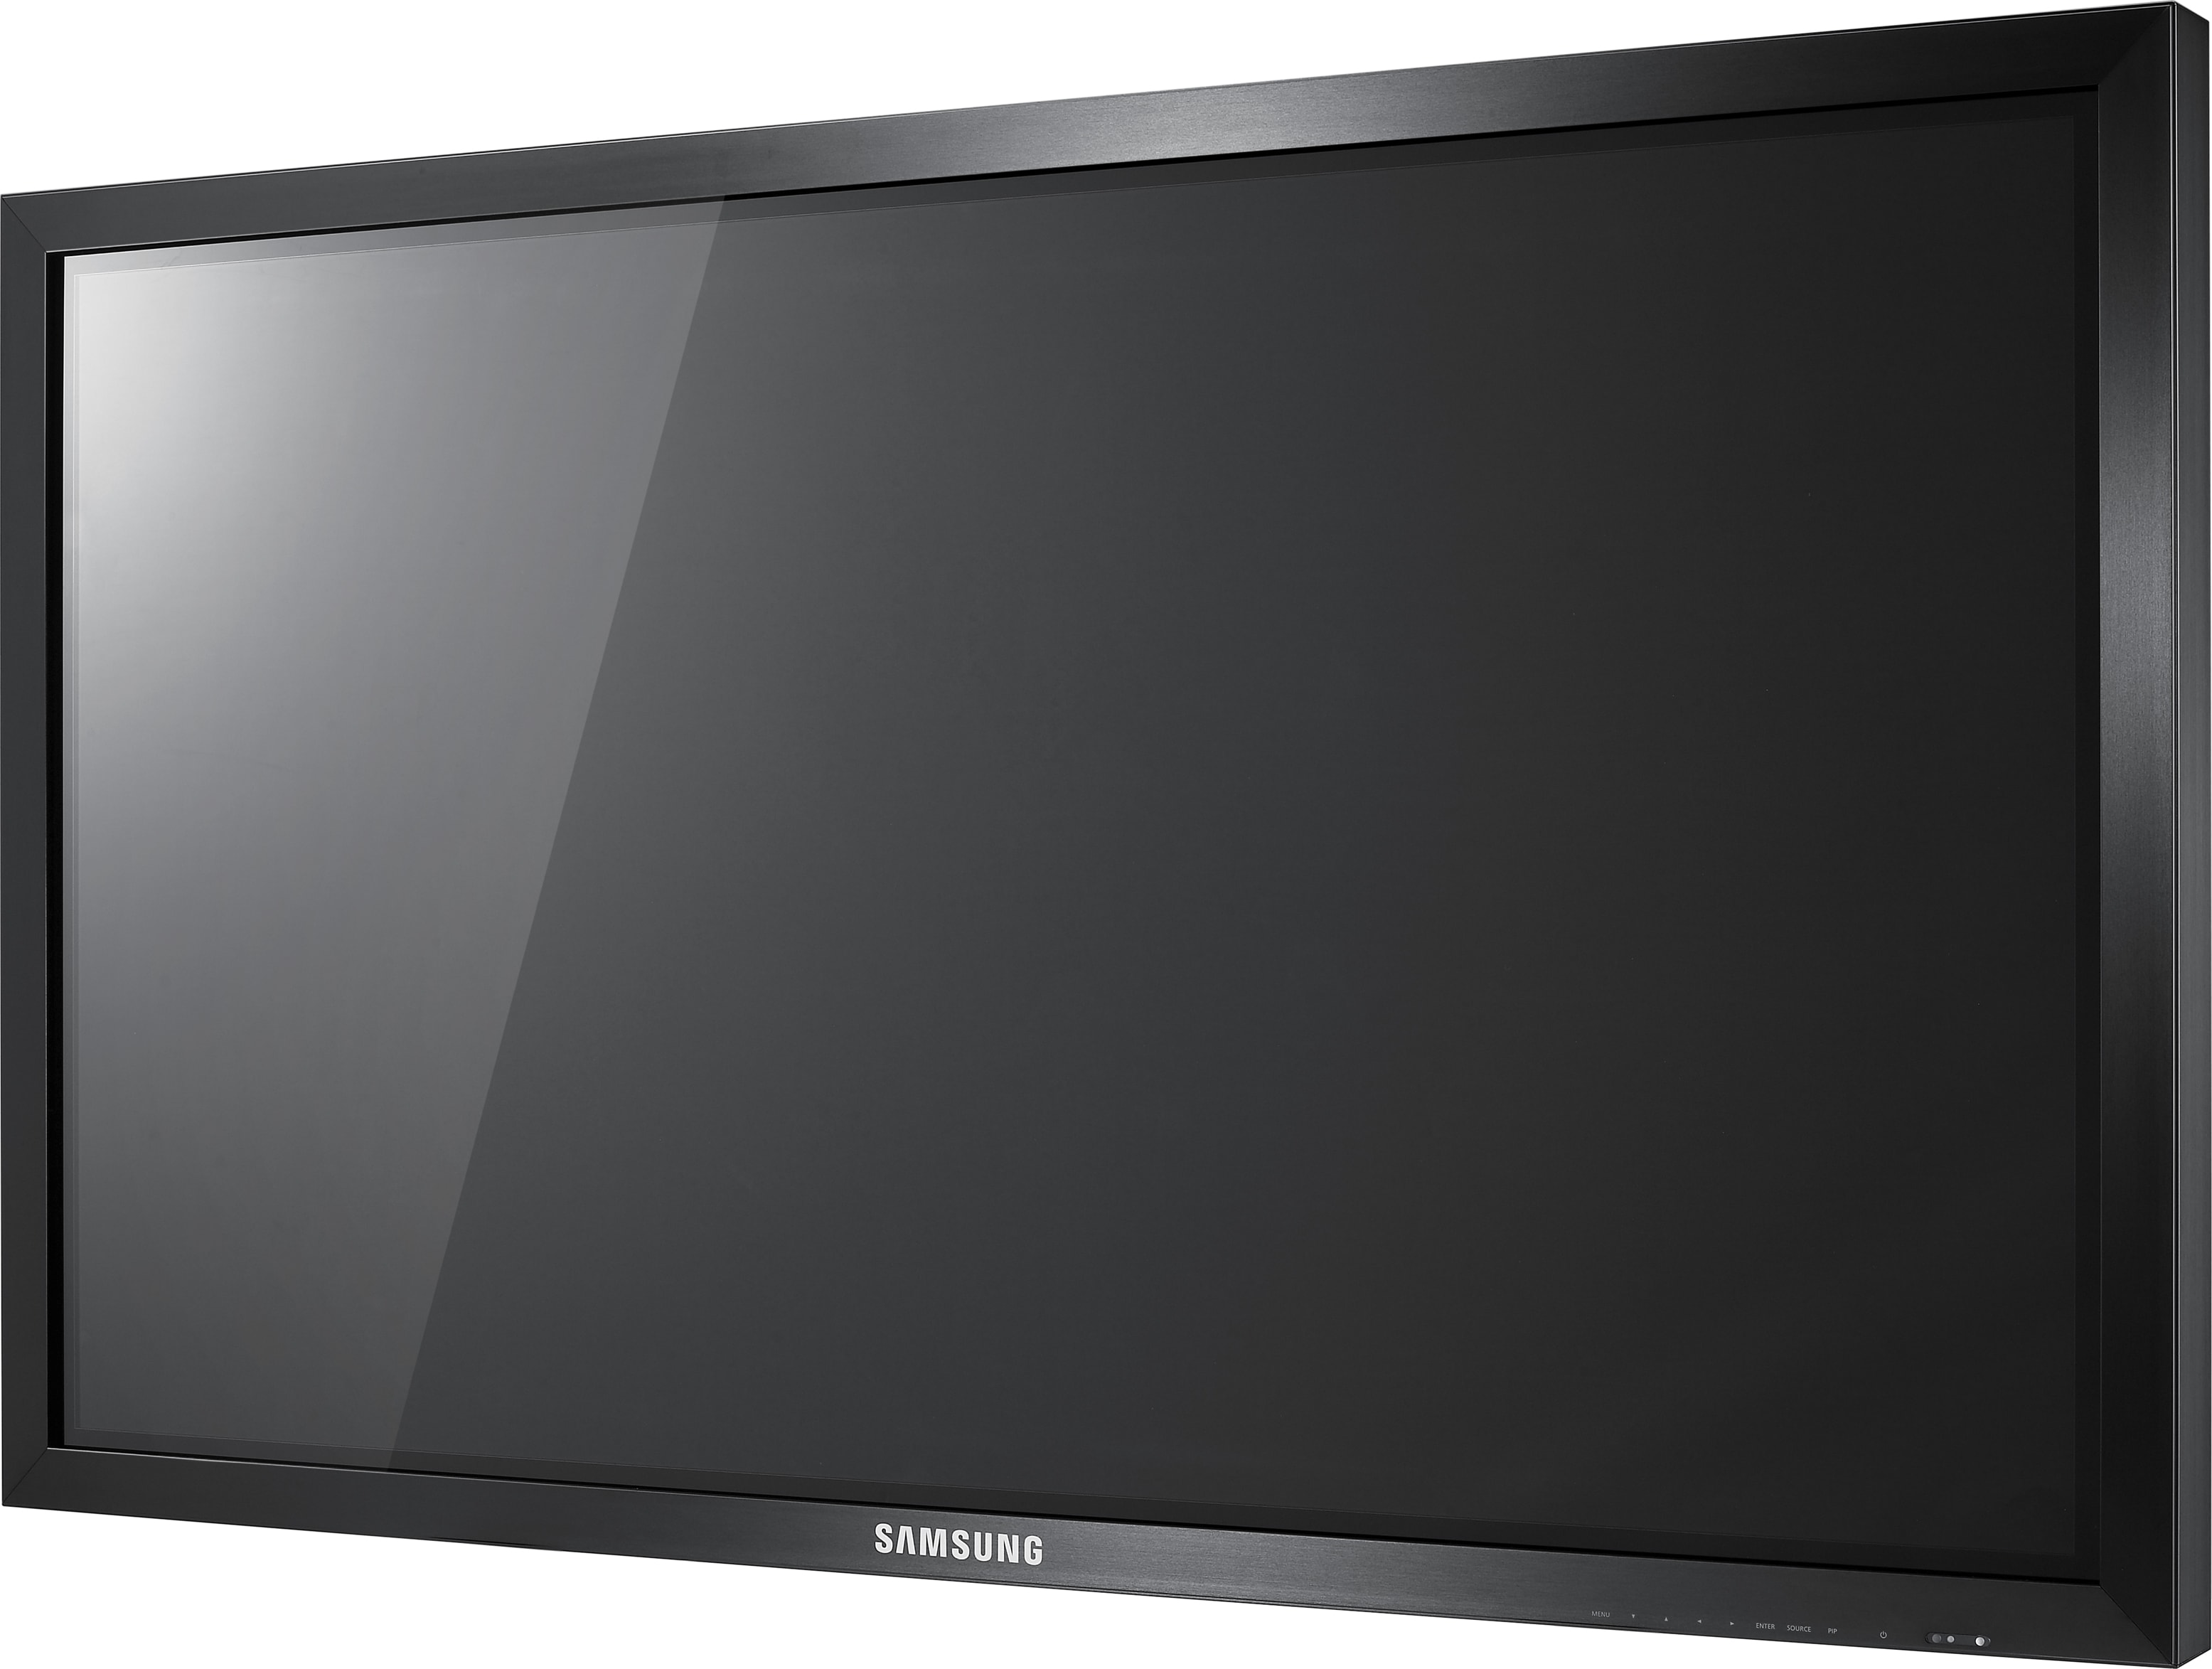 Samsung 650TS 65" Touch Screen LCD Display | TechEdu